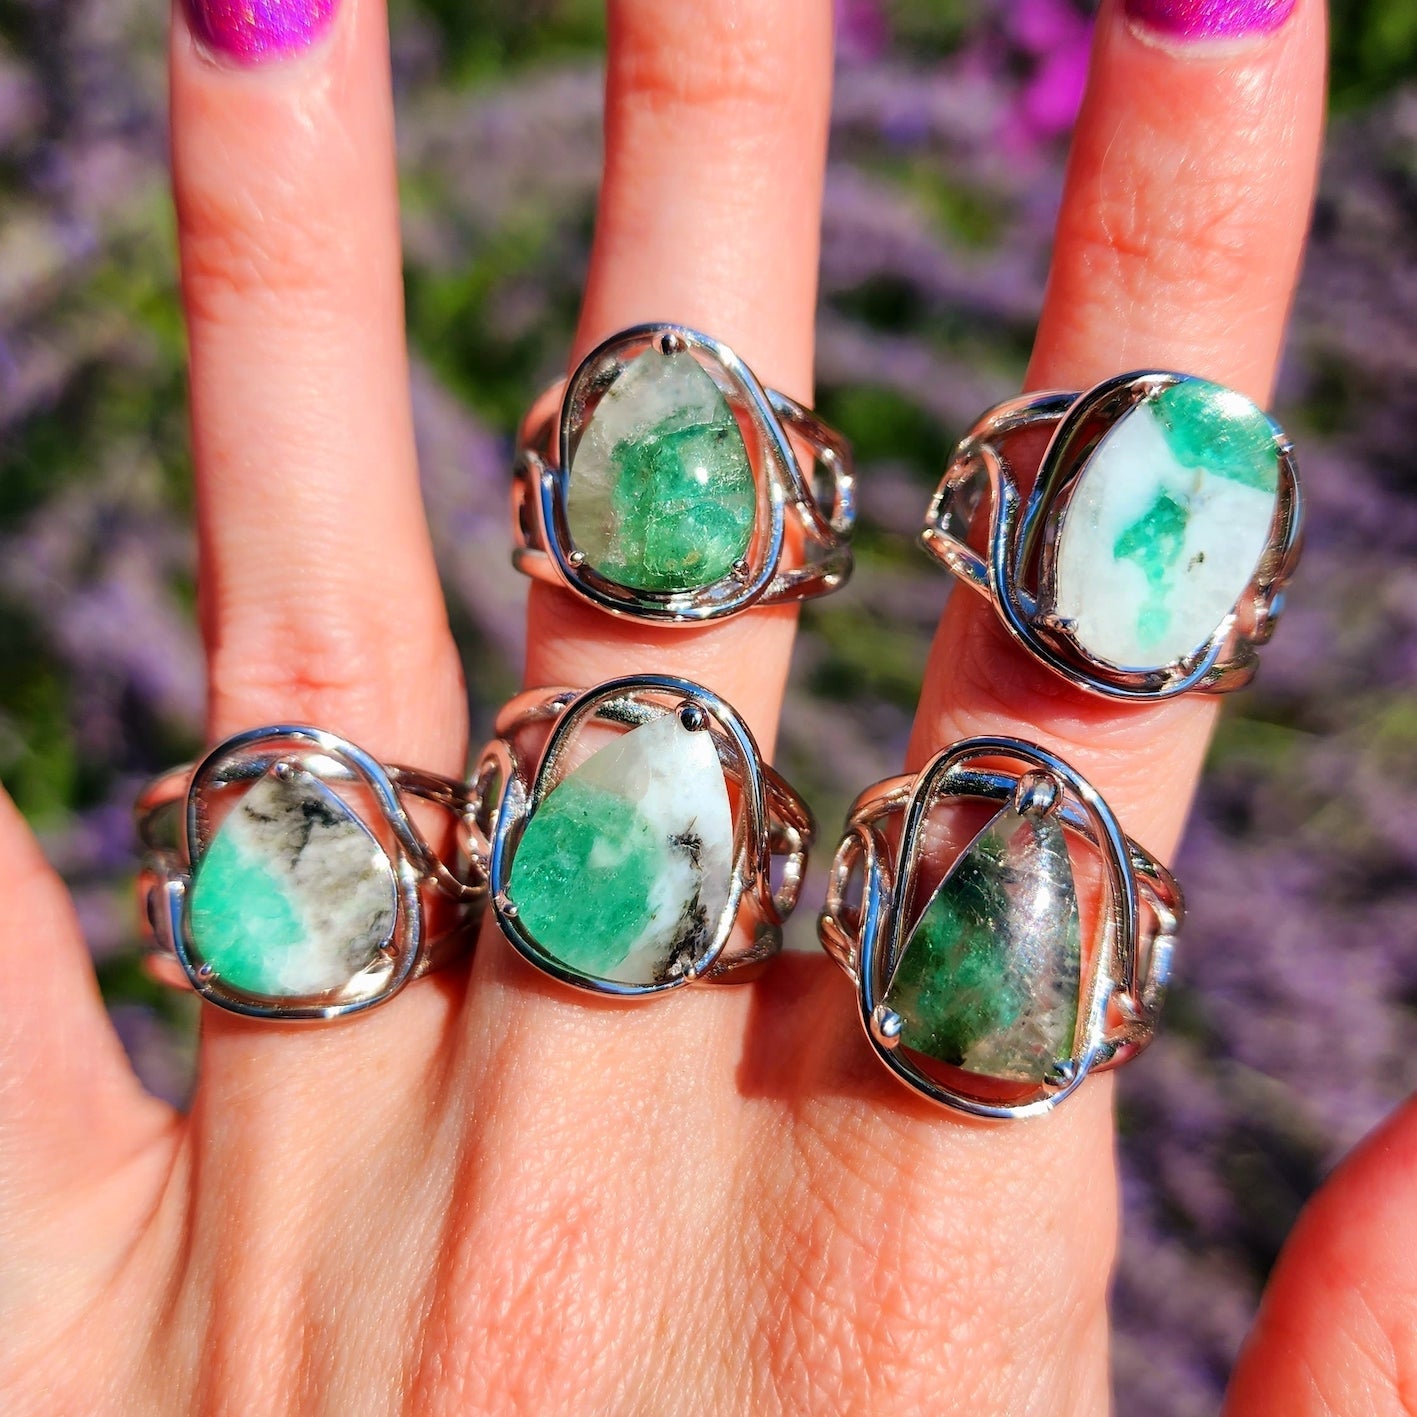 Enchanting Emerald Finger Cuffs